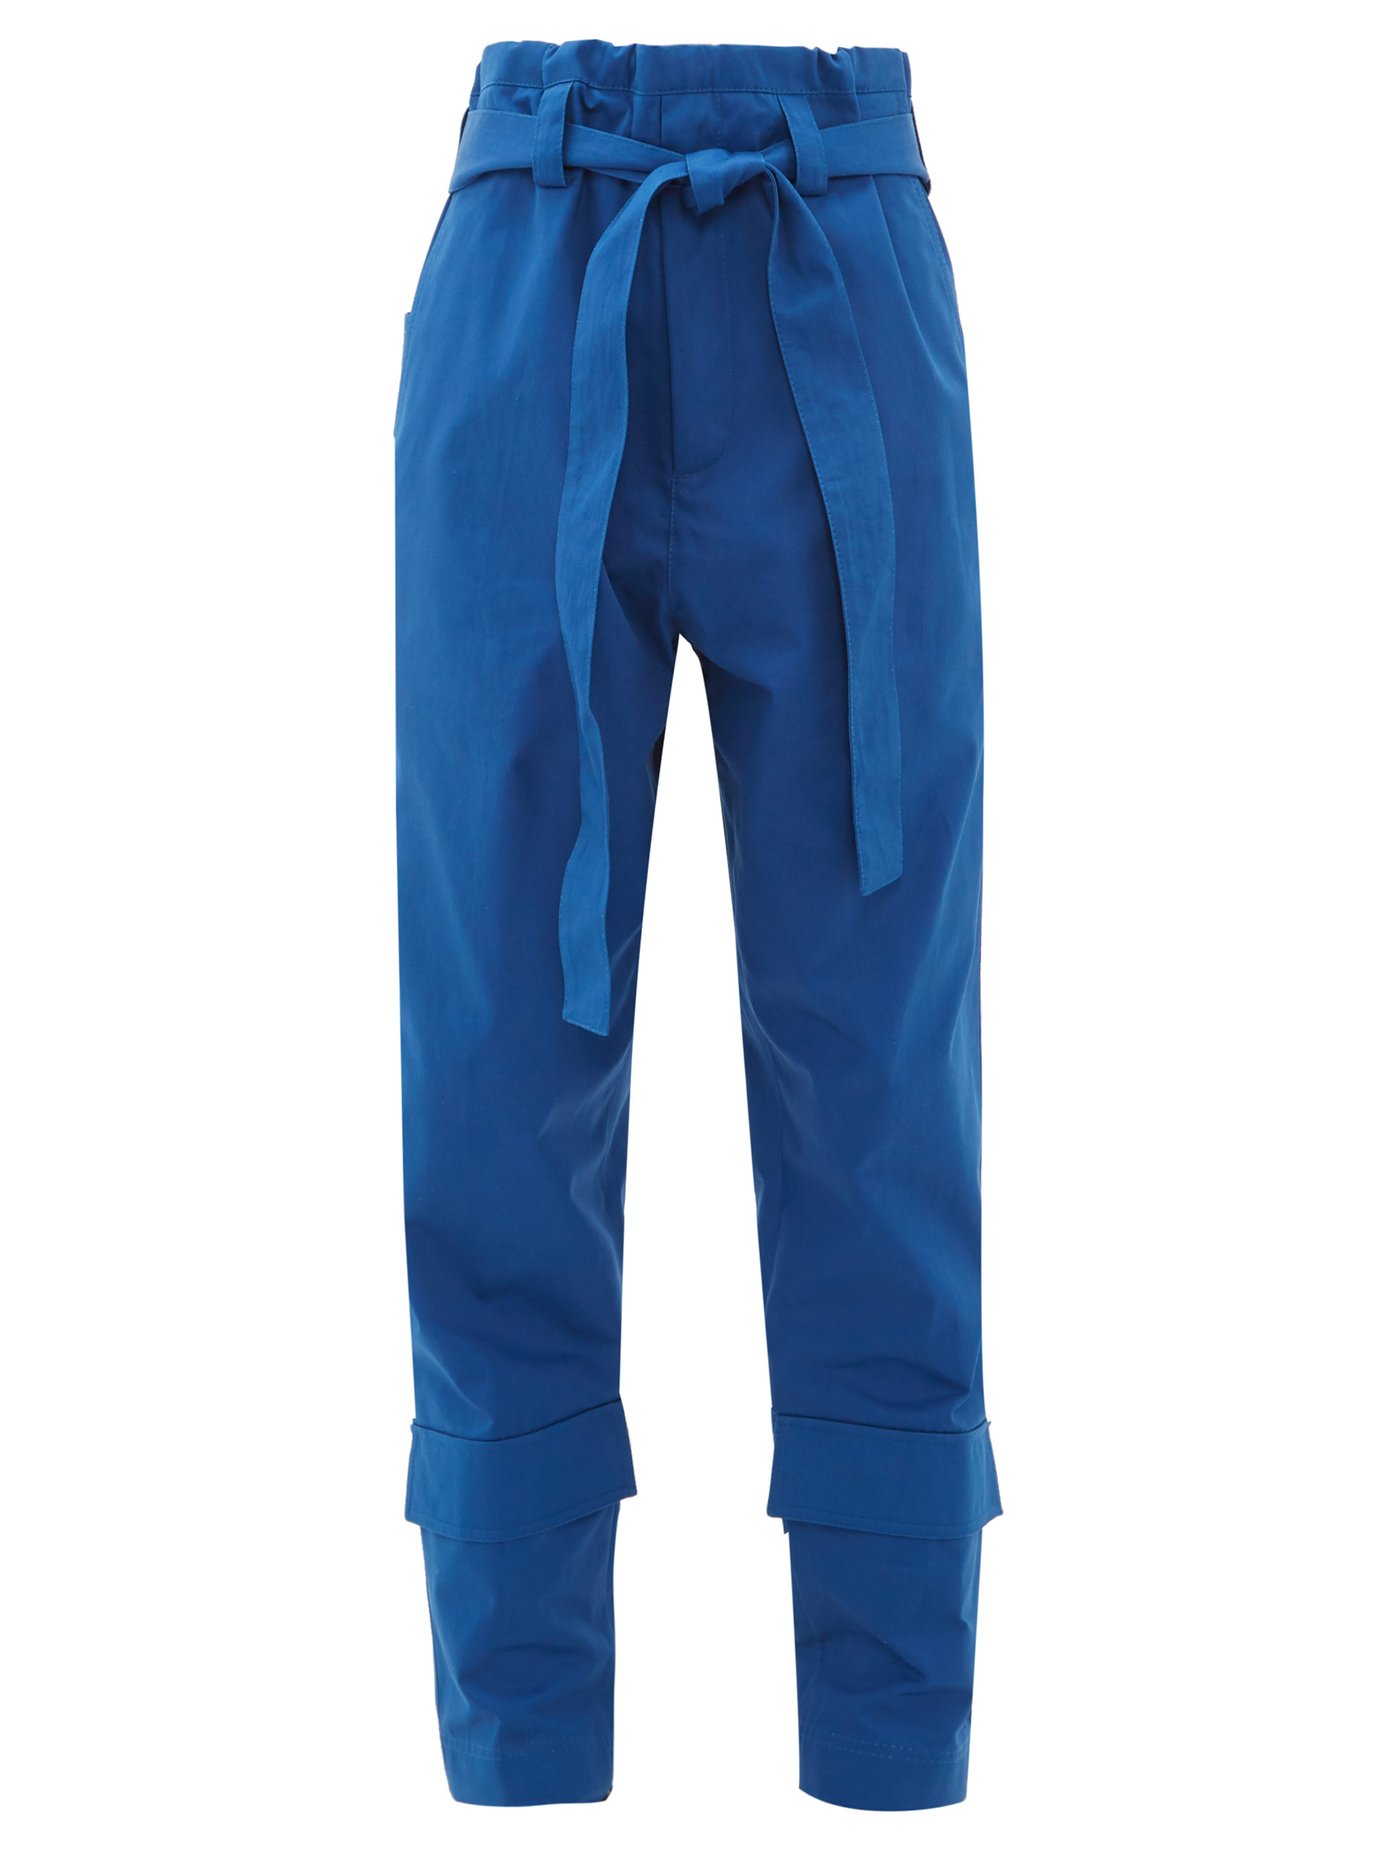 blue combat trousers